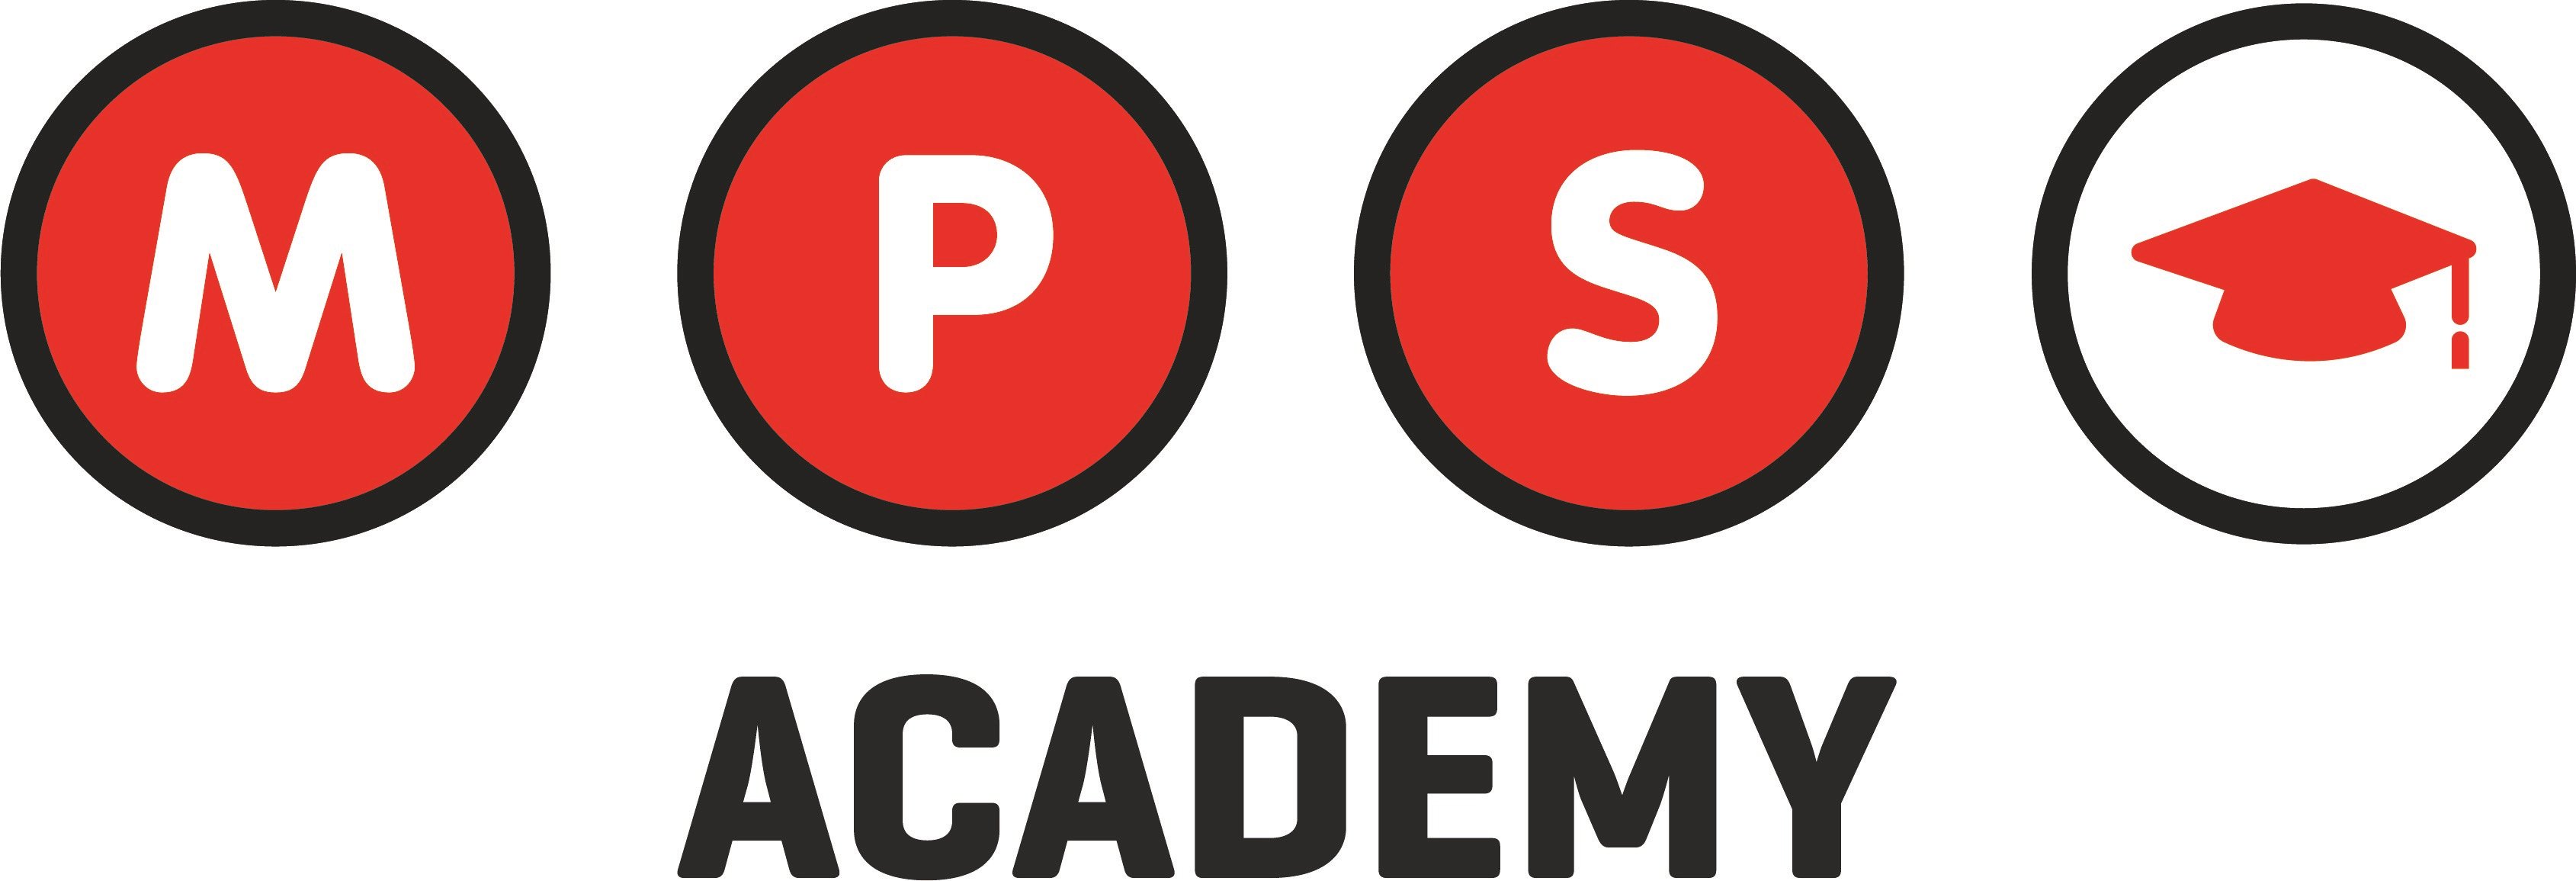 MPS academy logo